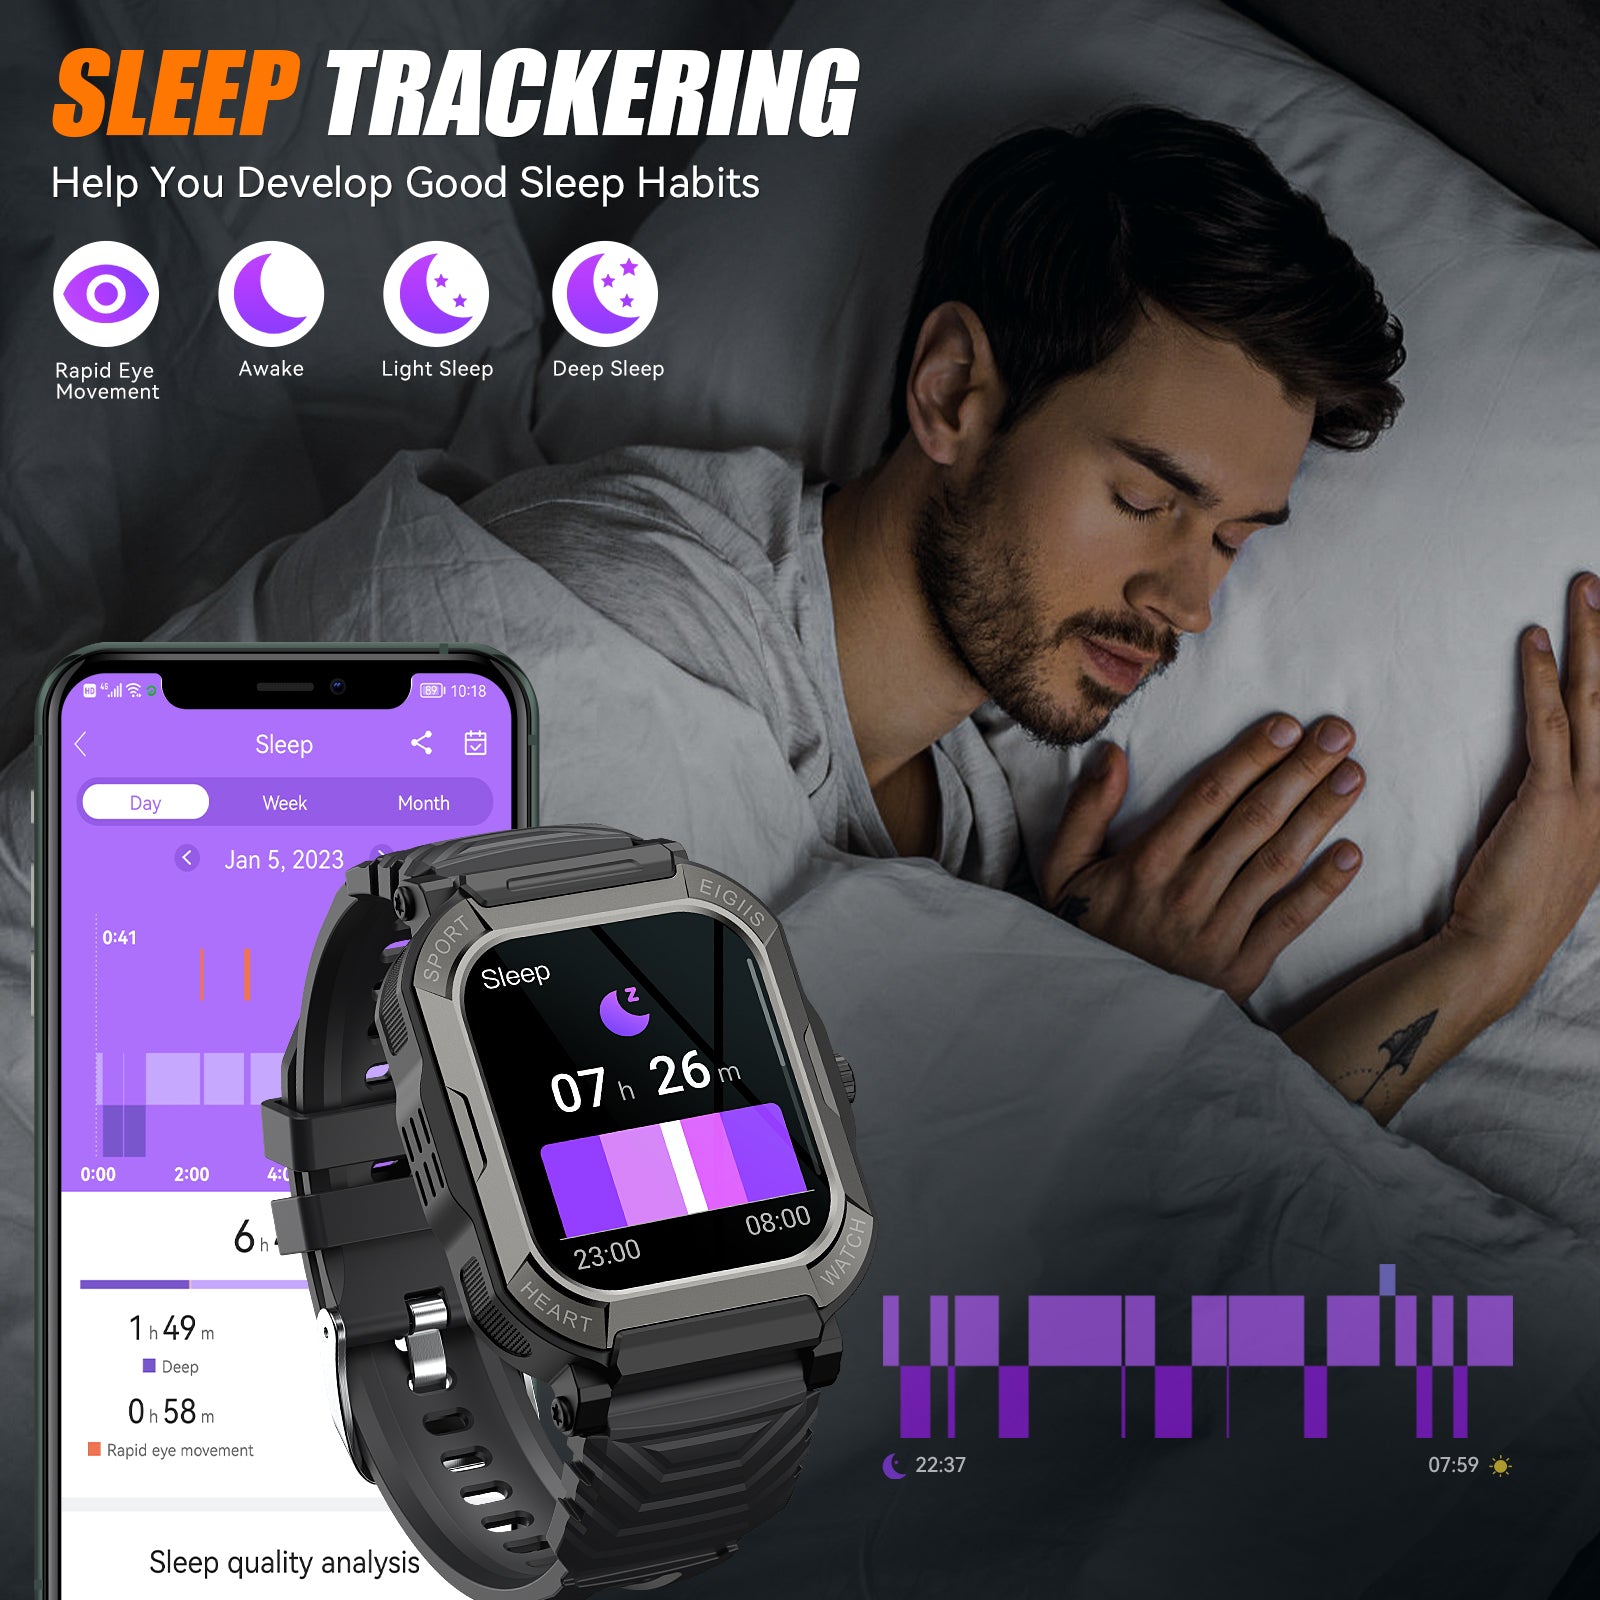 EIGIIS Smart Watch Answer/Make Call, Fitness Tracker with 24/7 Heart R